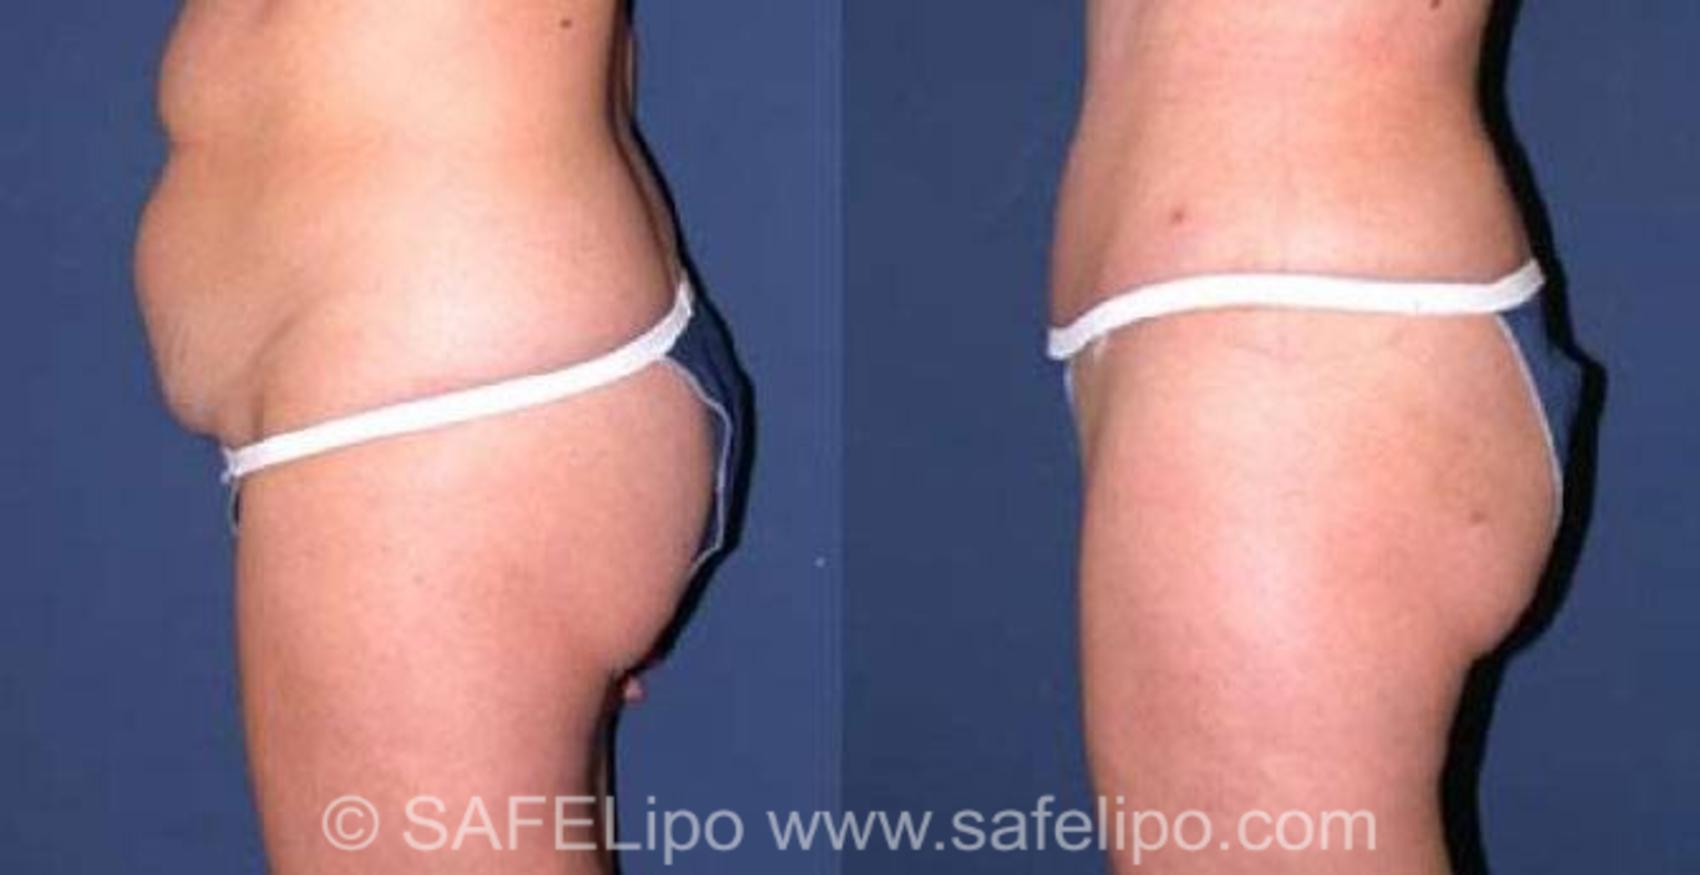 SAFELipoHD® Case 75 Before & After View #5 | SAFELipo®